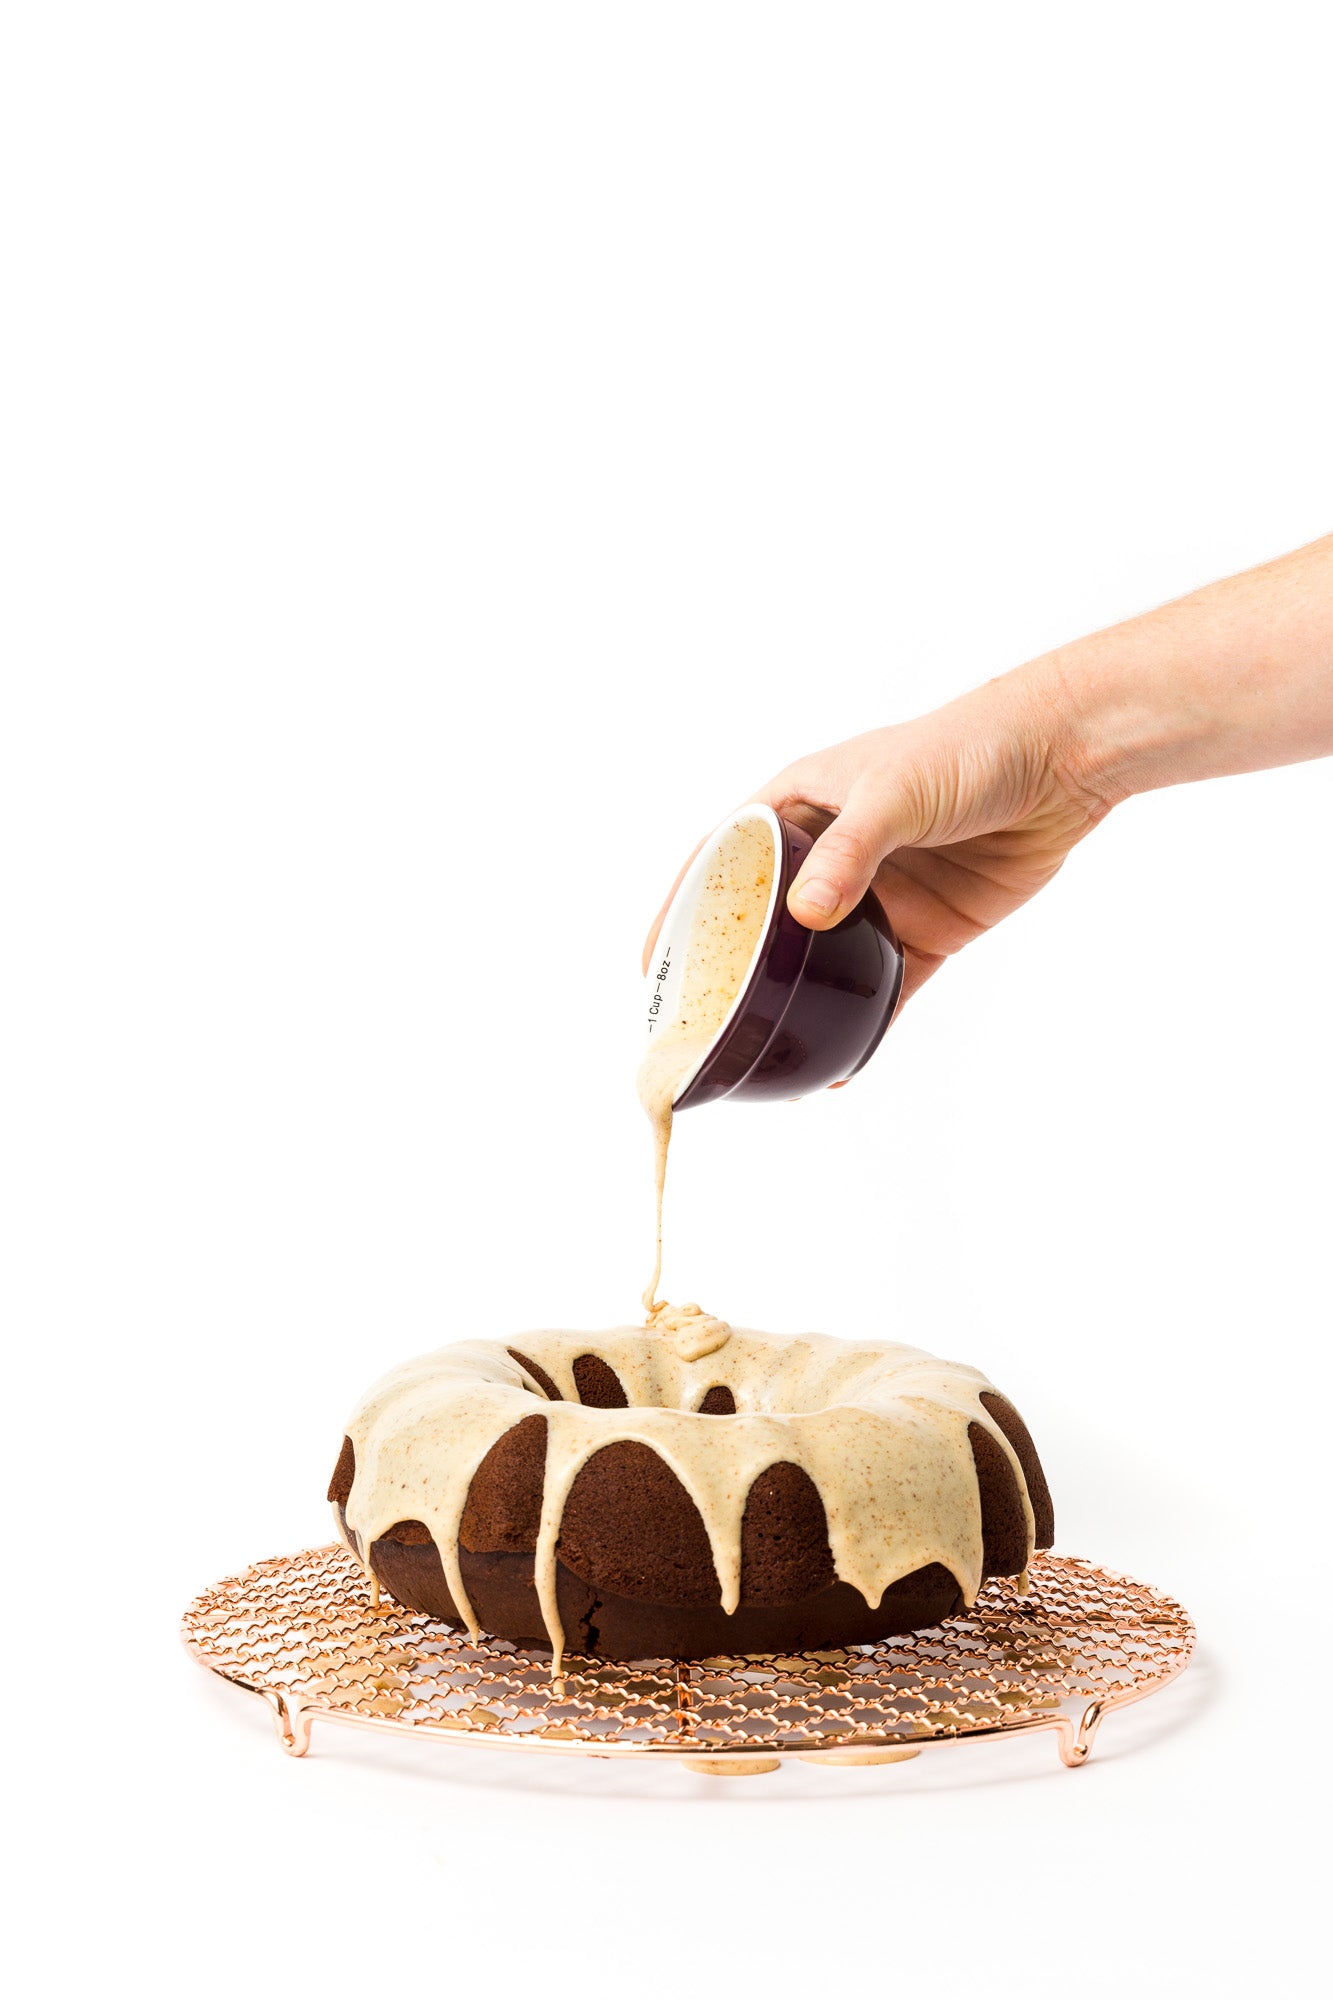 Image of frosting being poured over bundt cake on baking rack for Miss Jones Baking Co Chocolate Almond Butter Bundt Cake